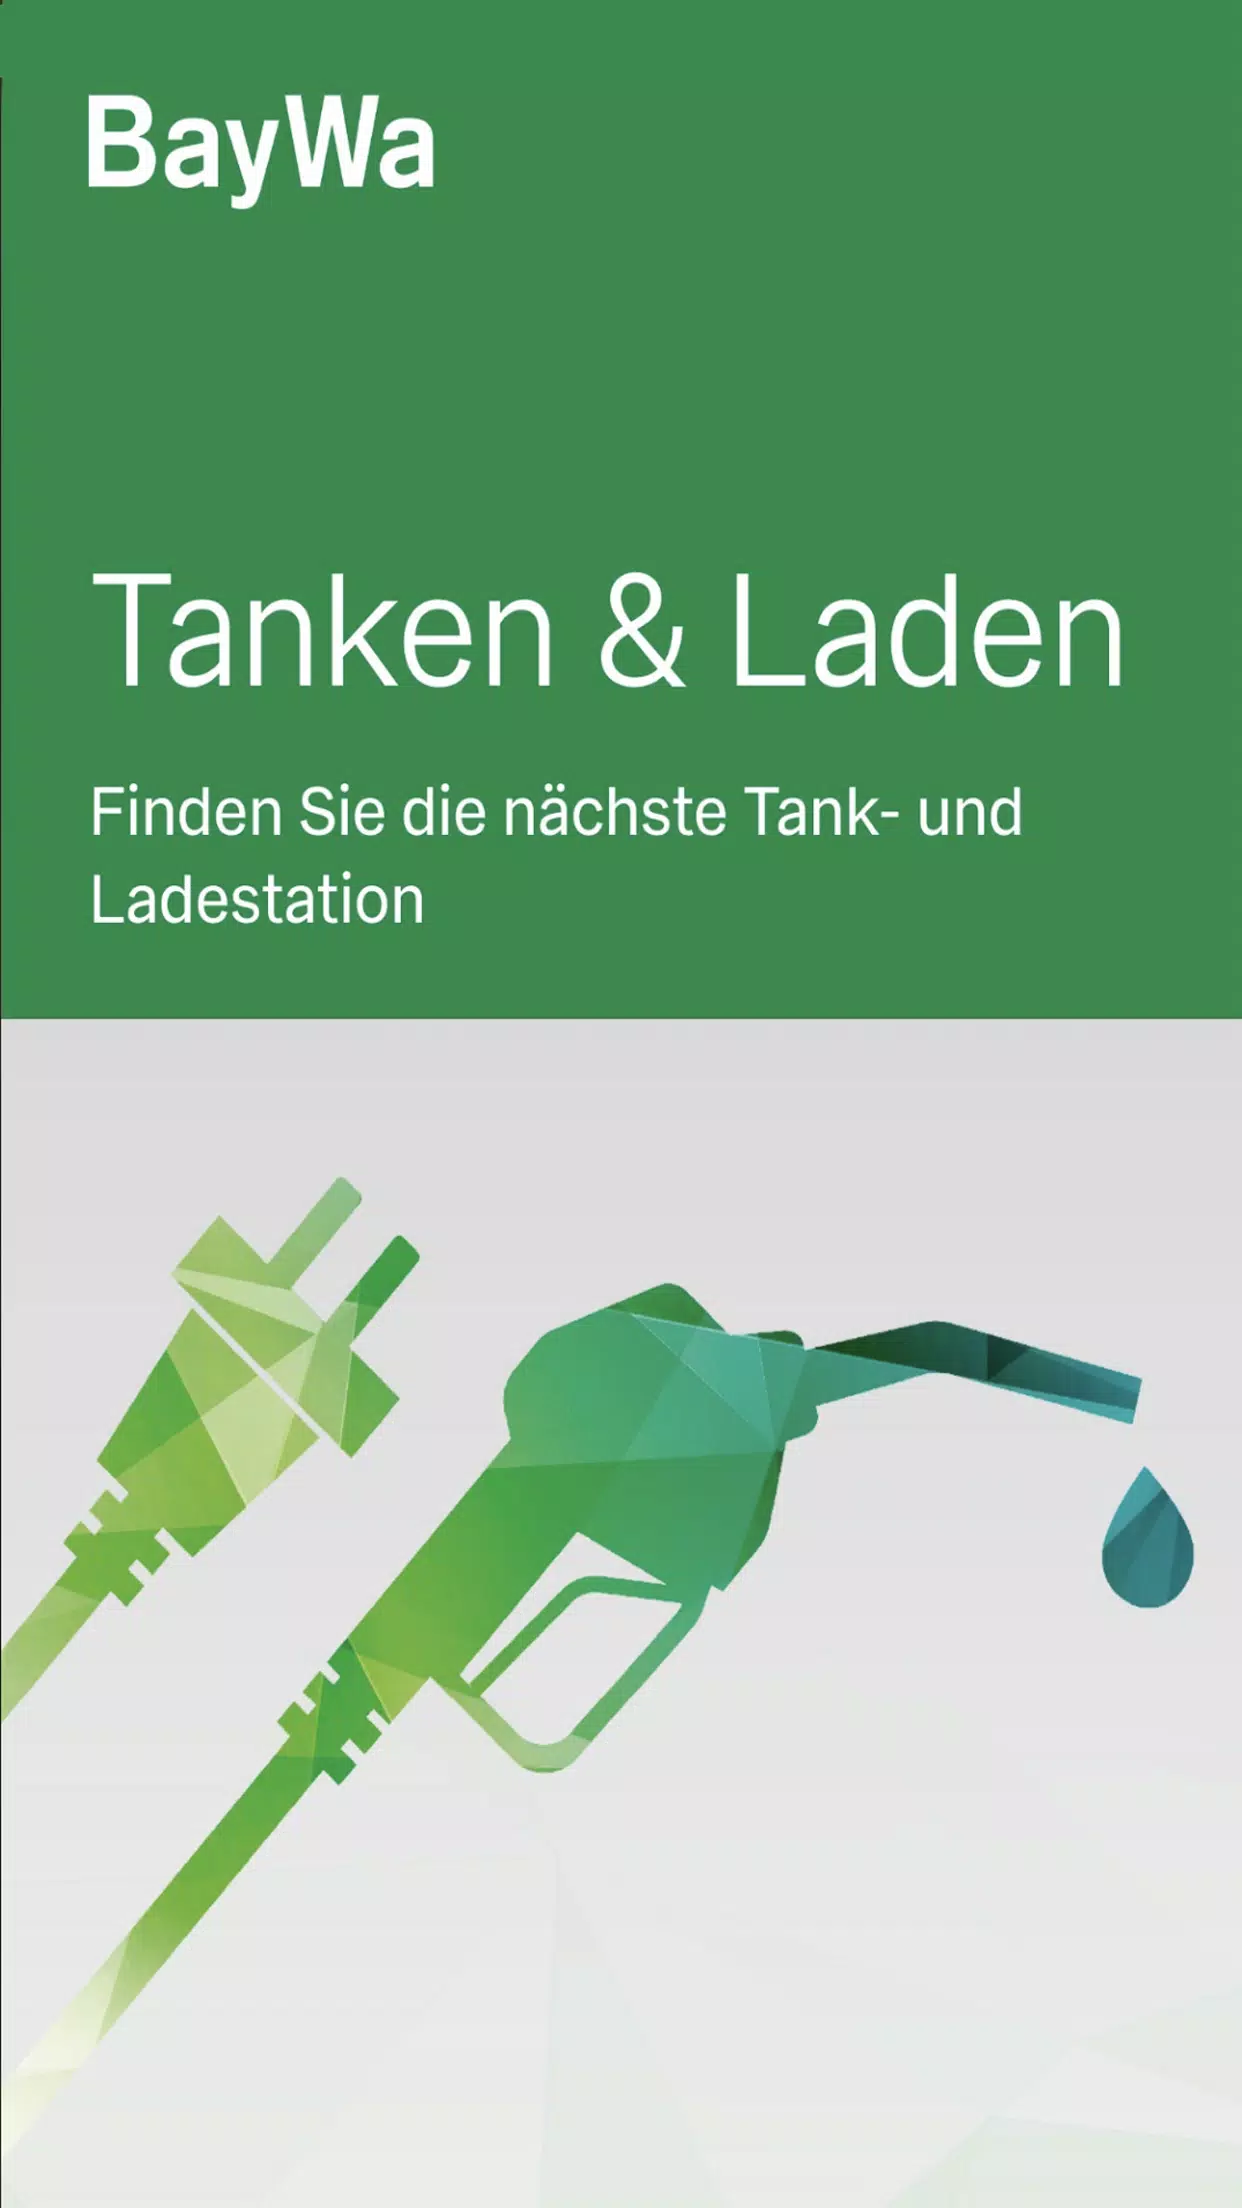 BayWa Tanken & Laden for Android - APK Download